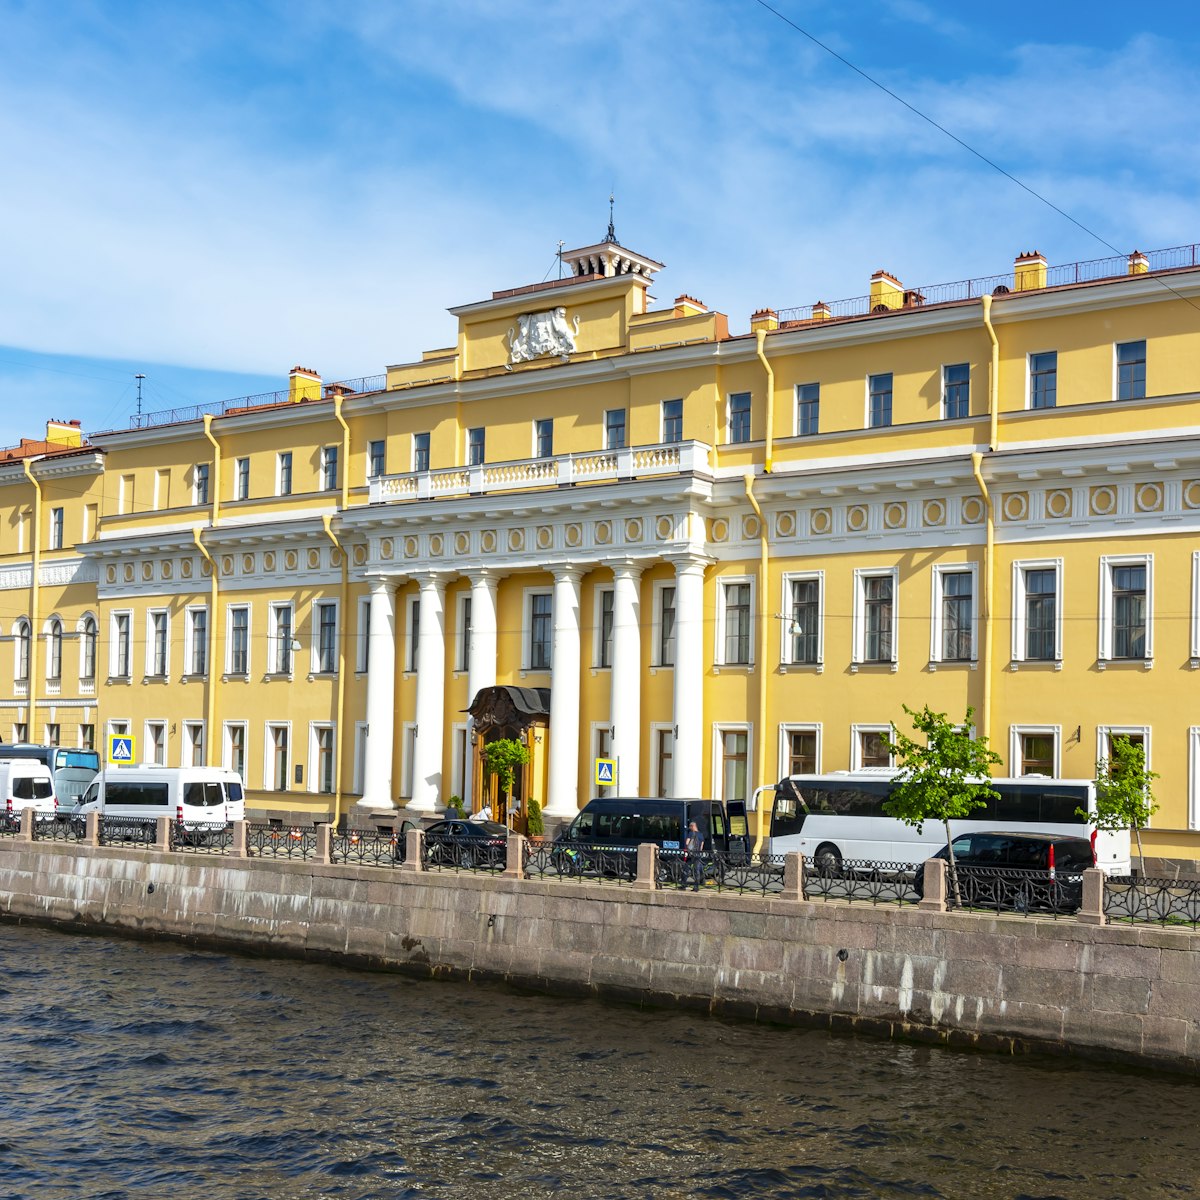 Yusupov palace on the Moyka river.
